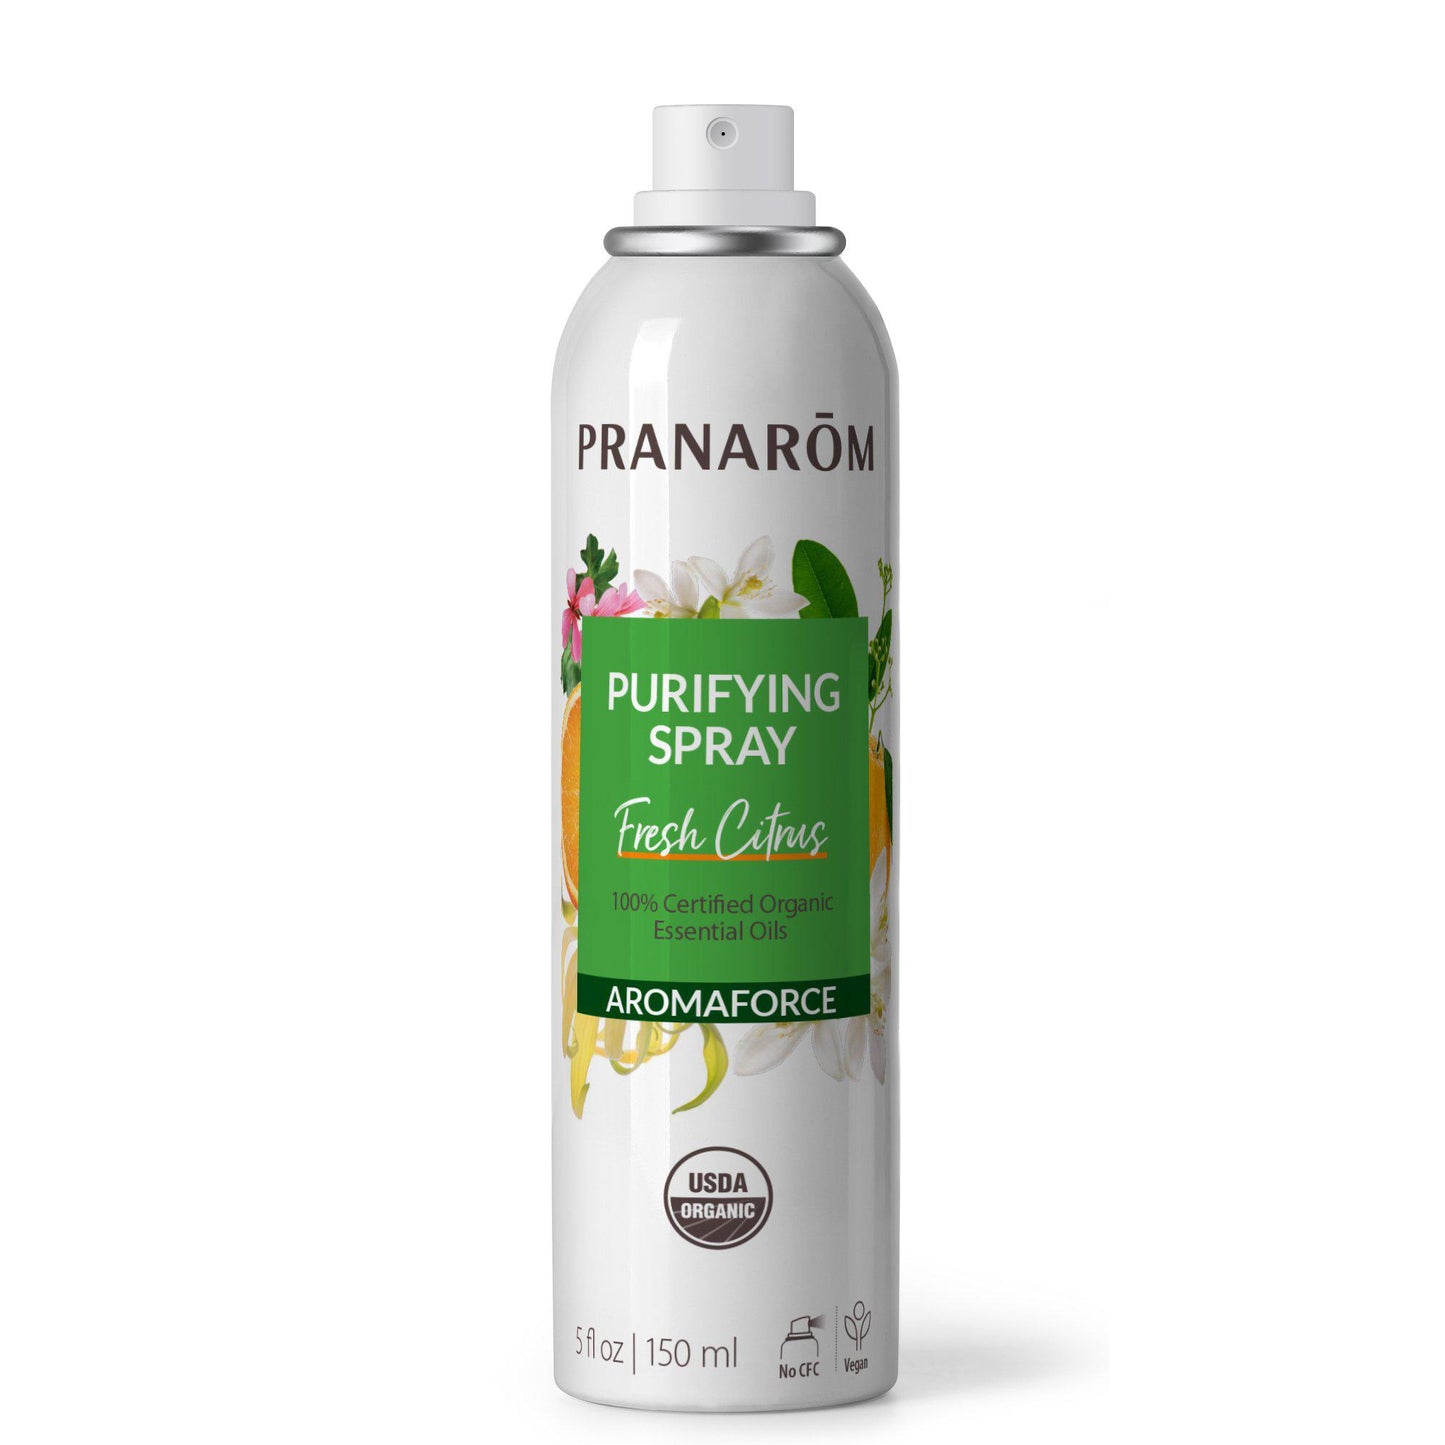 Purifying Spray - Fresh Citrus